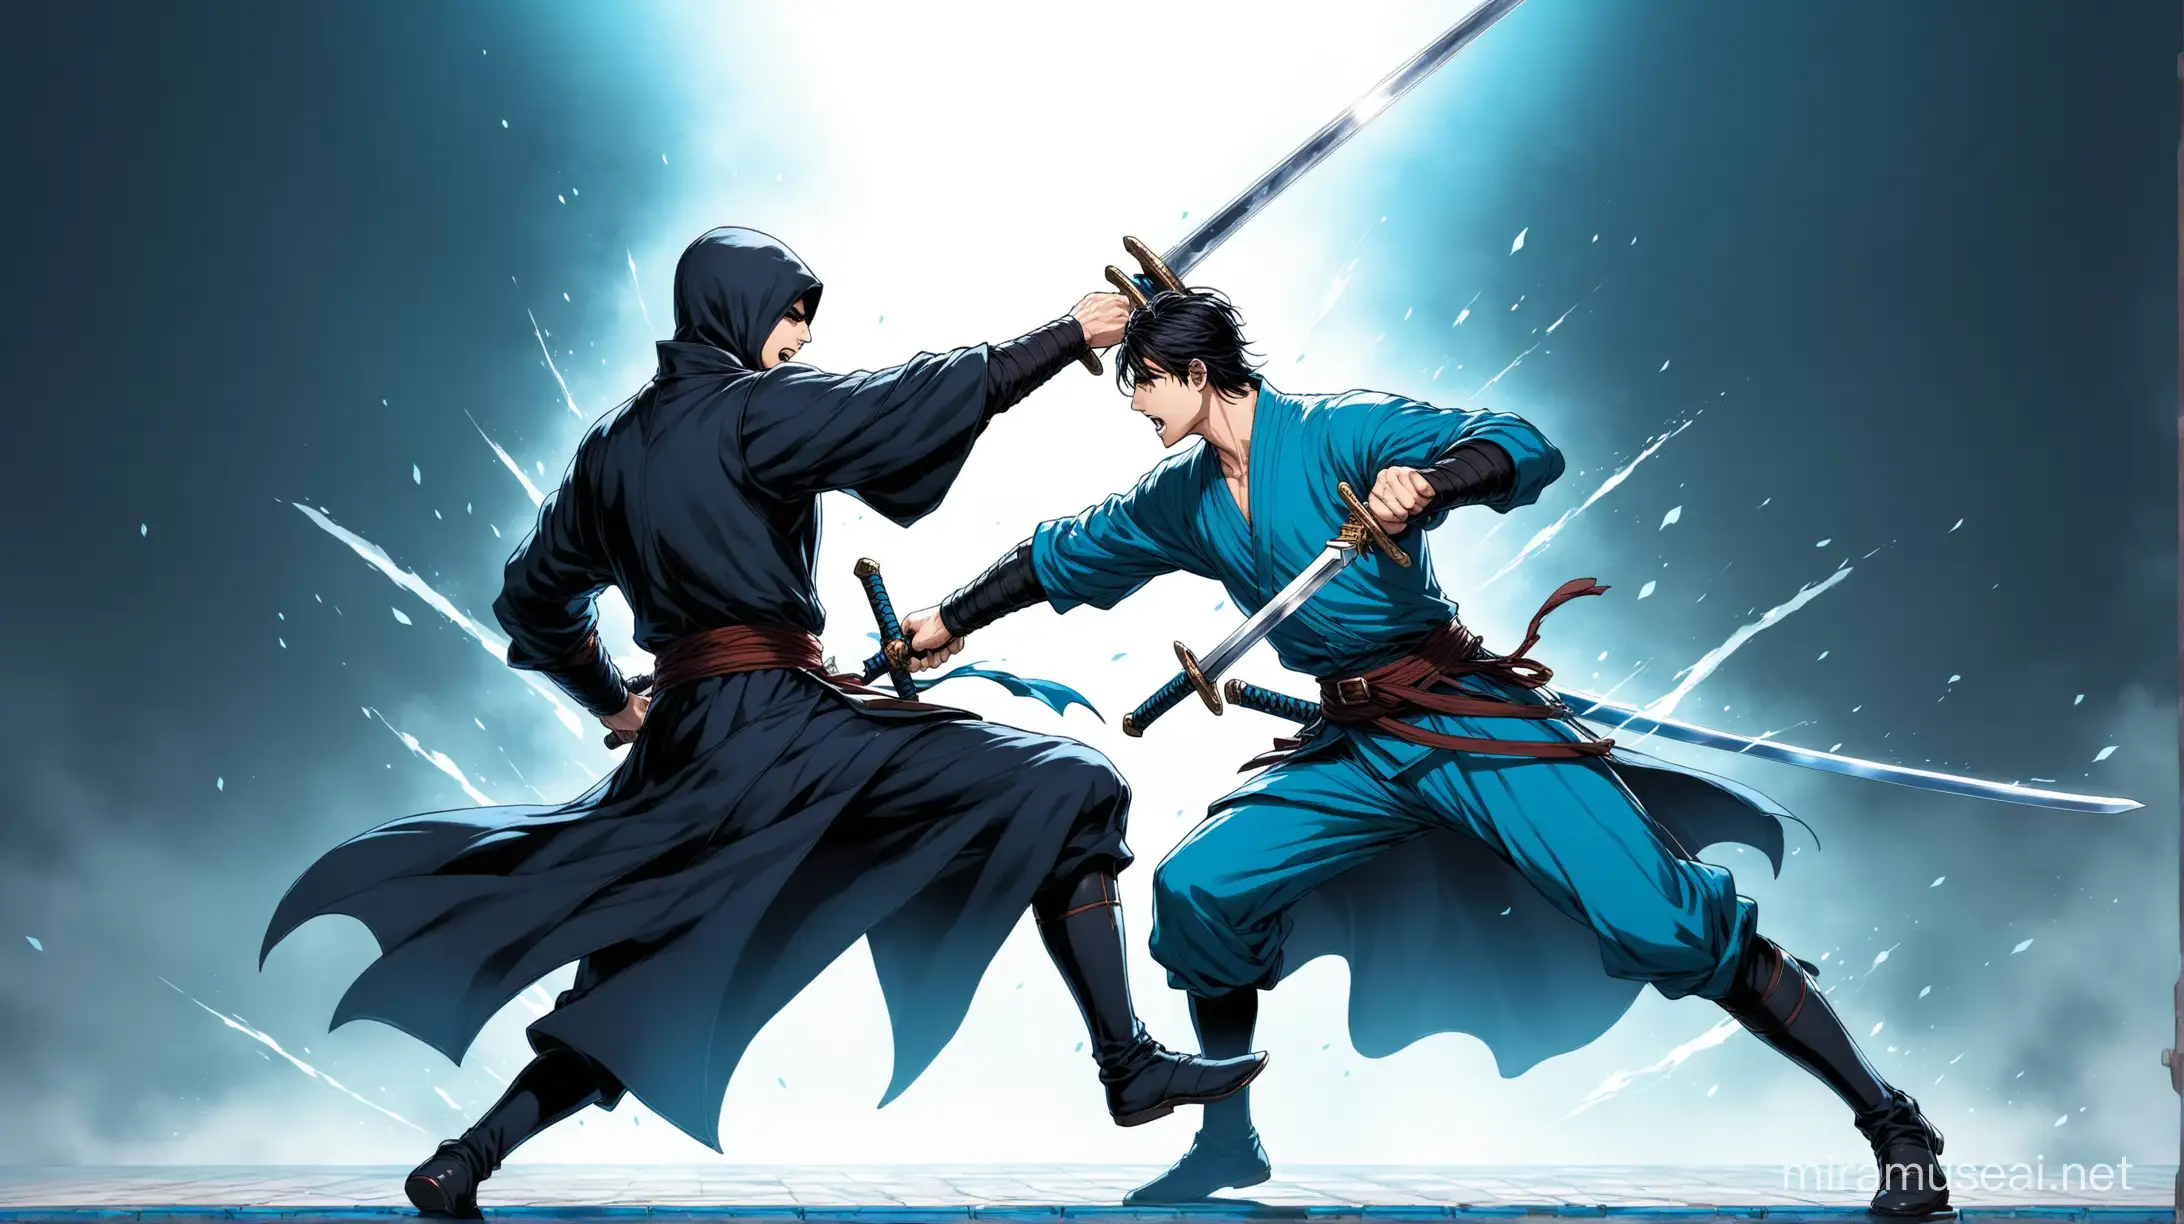 Blue Swordsman Dueling Dark Opponent in Intense Clash